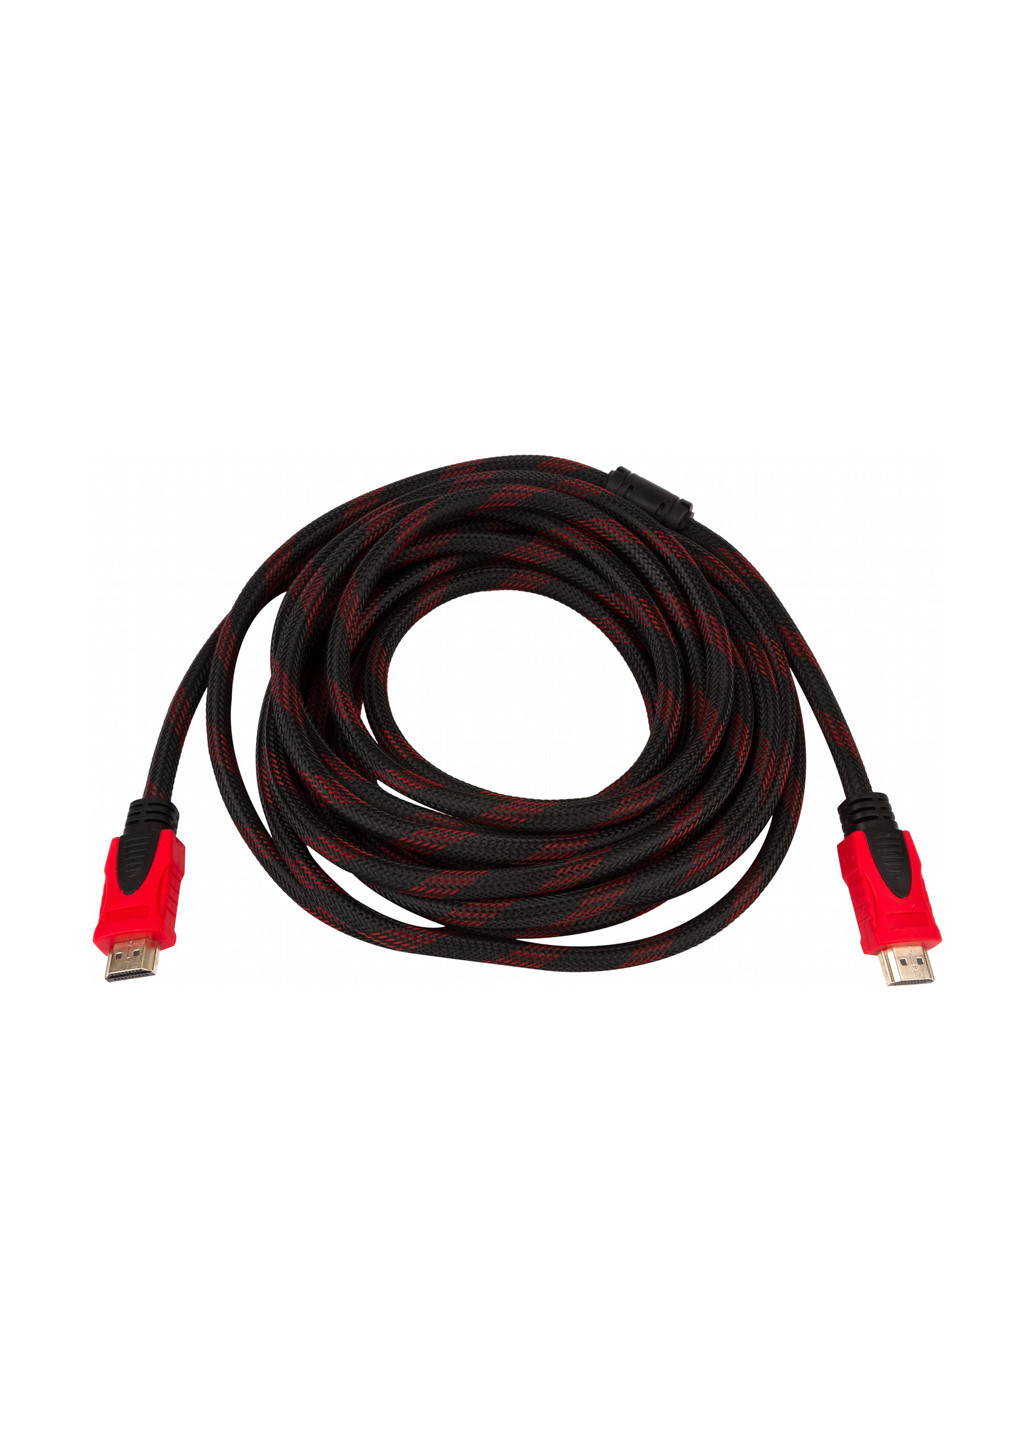 Кабель HDMI copper 1.4 v, 5 м (70050) CHARMOUNT кабель charmount hdmi copper 1.4 v, 5 м (70050) (145607417)